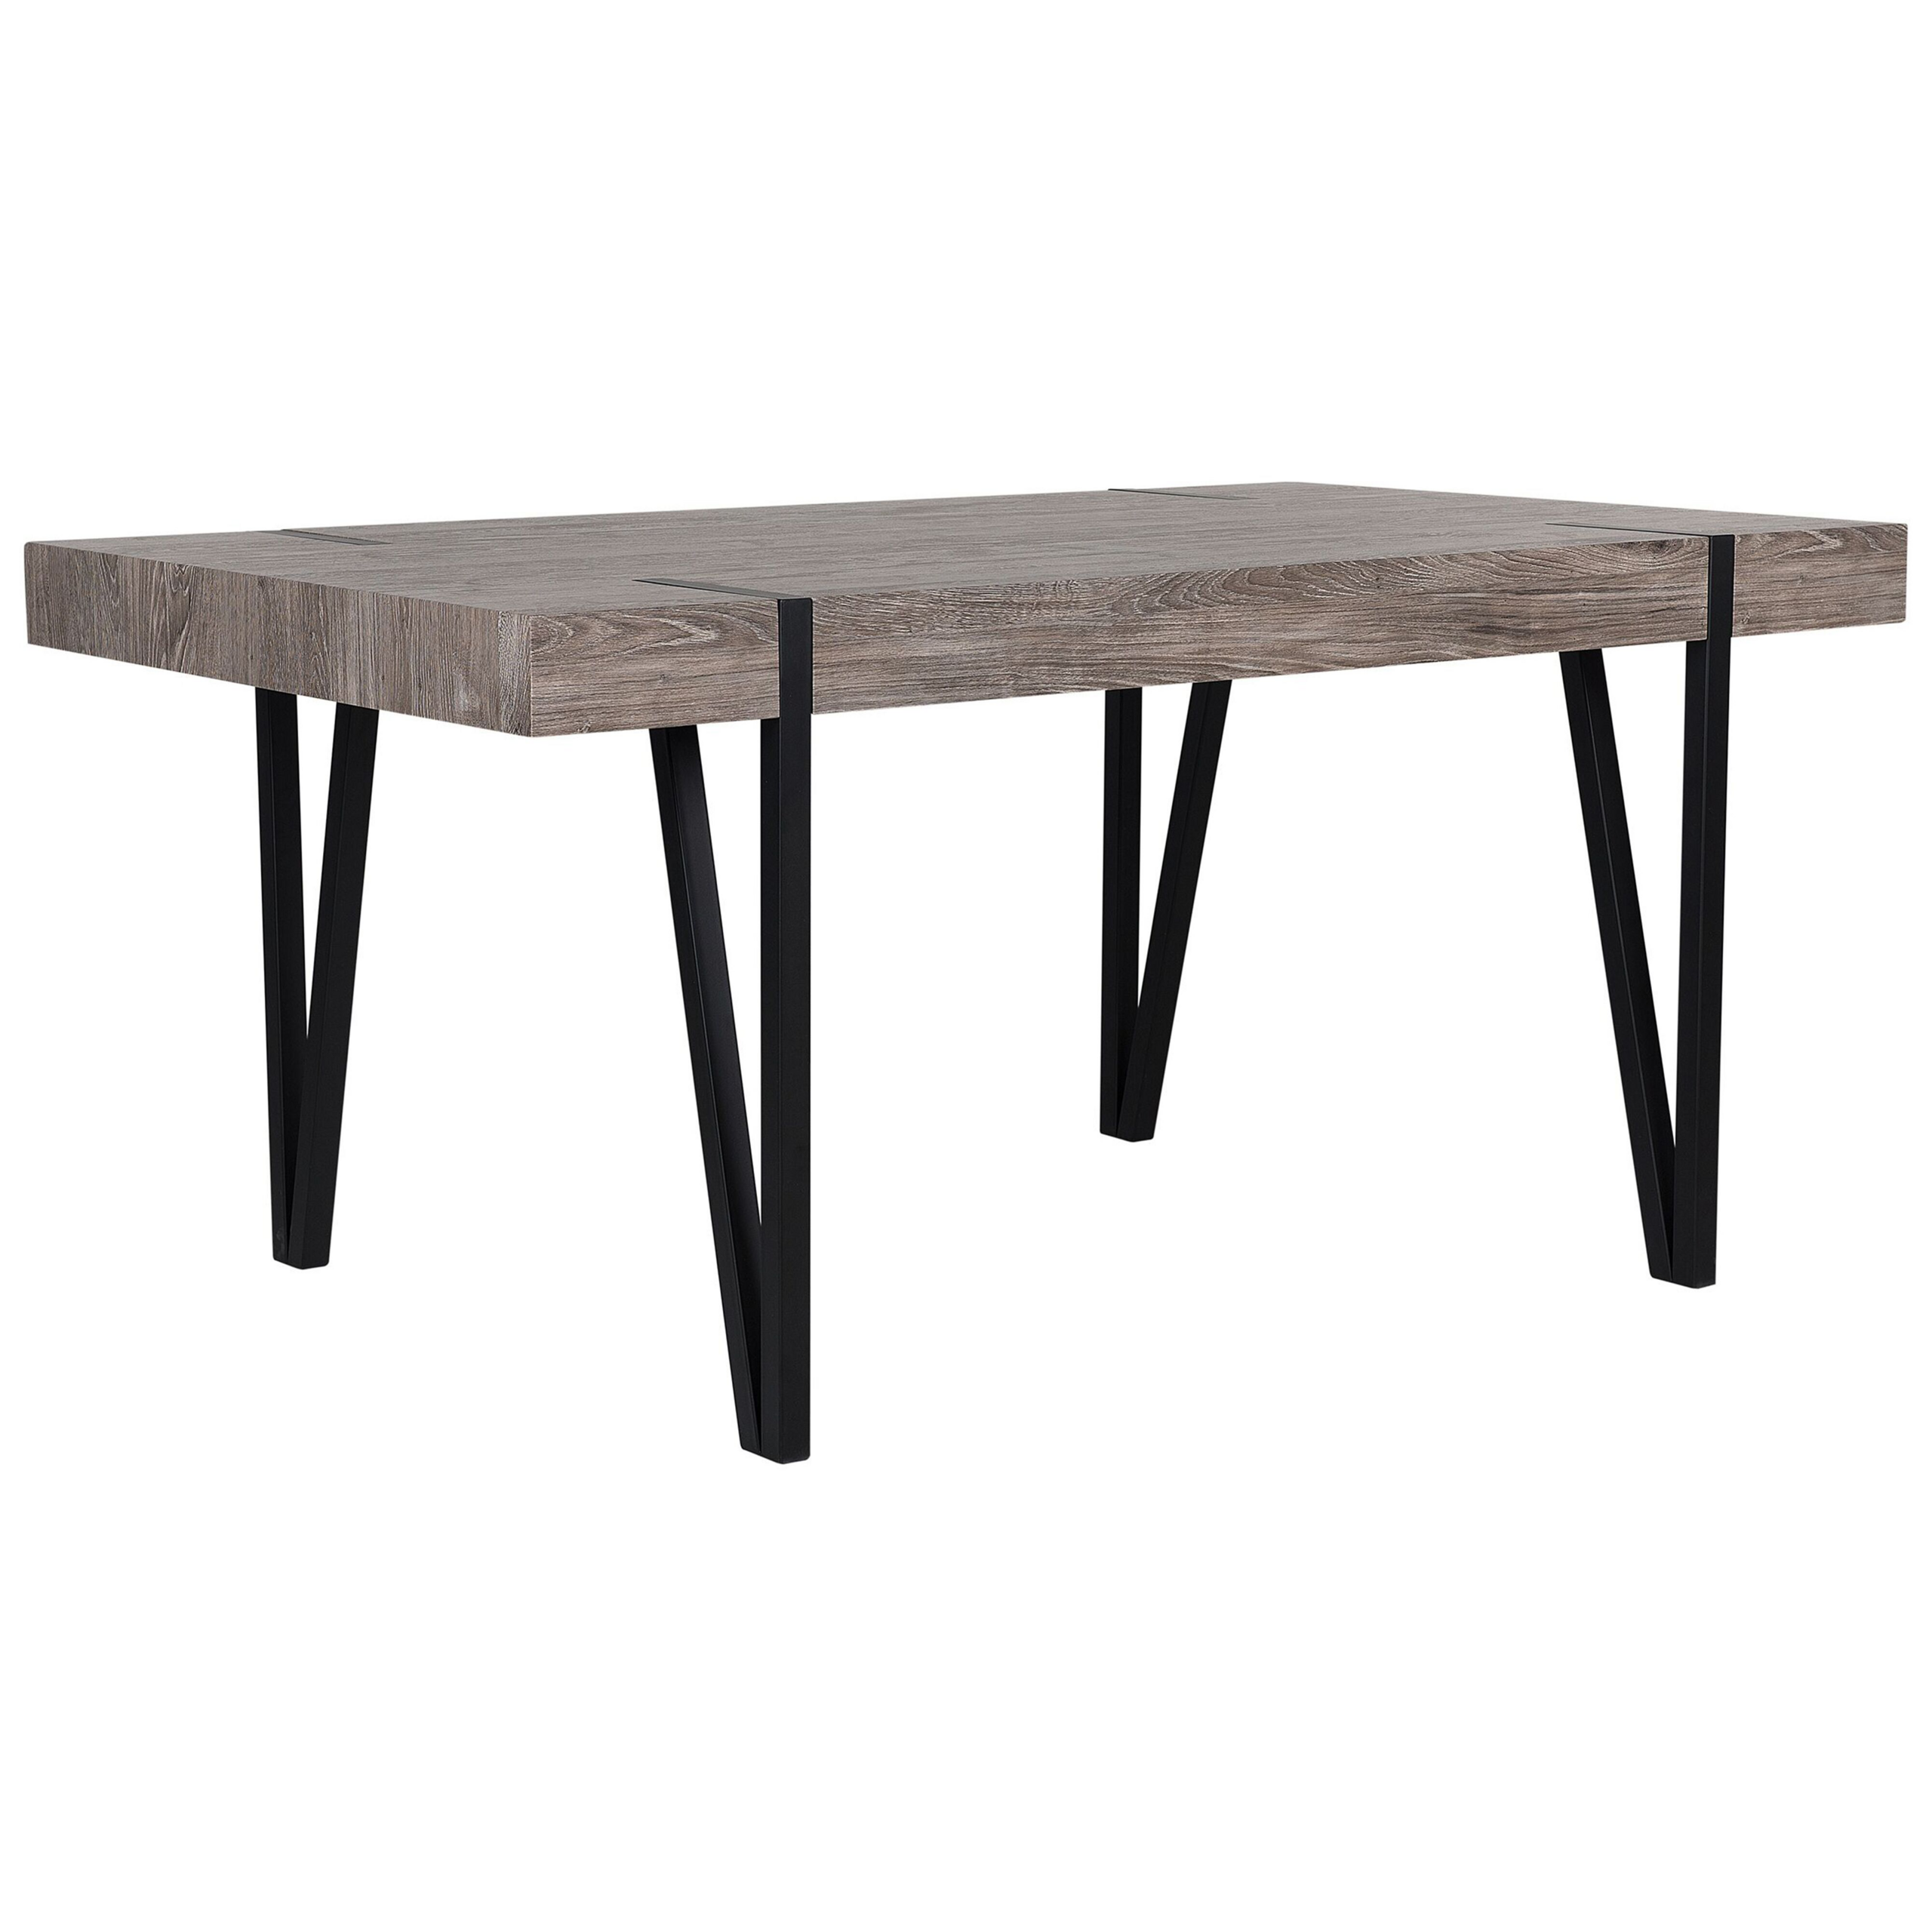 Beliani Dining Table Dark Wood Top Black Metal Hairpin Legs 150 x 90 cm Rectangular Industrial Style